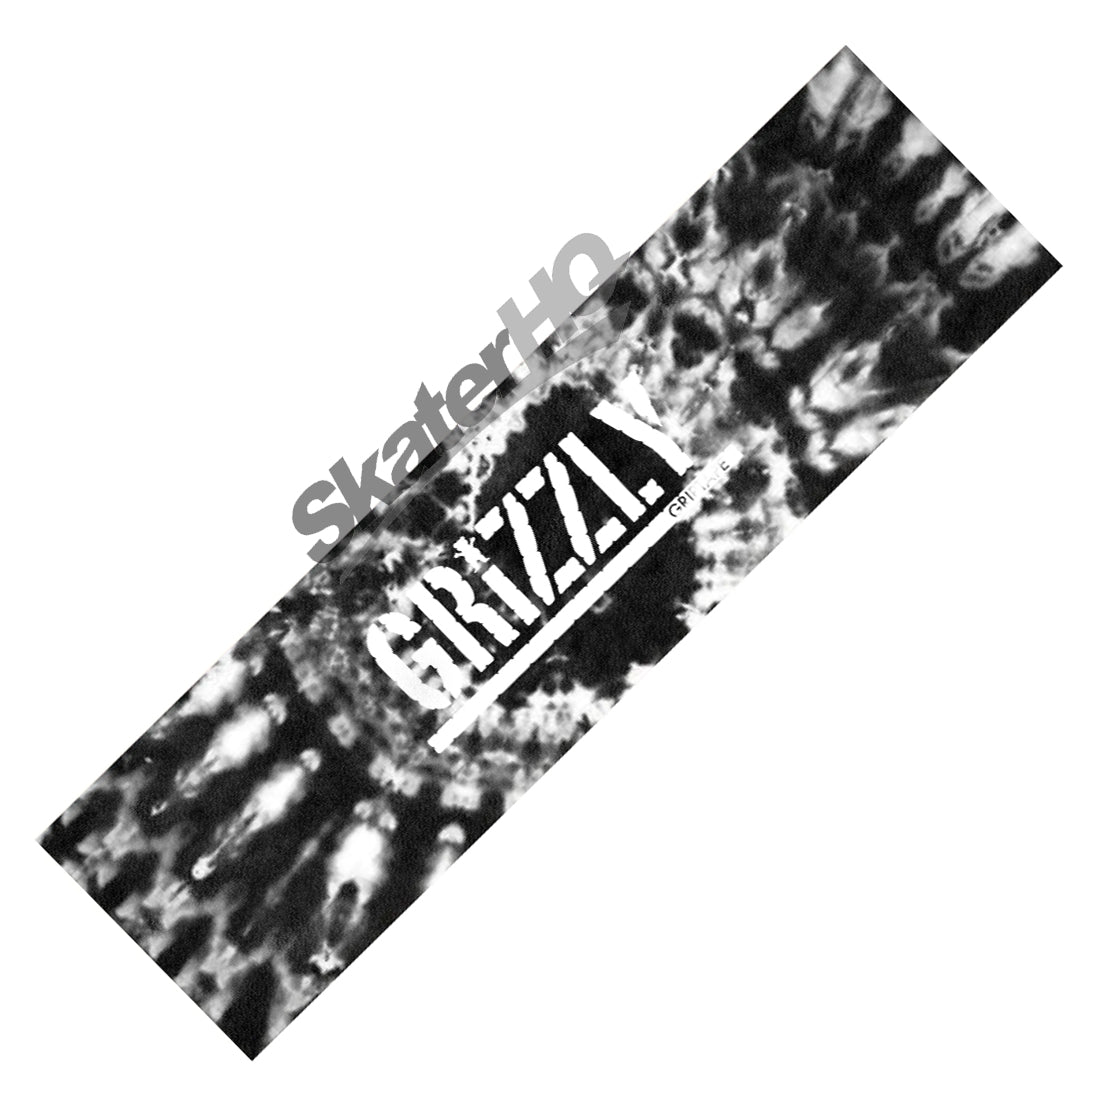 Grizzly Stamp Tie Dye V2 Griptape - Black/White Spiral Griptape